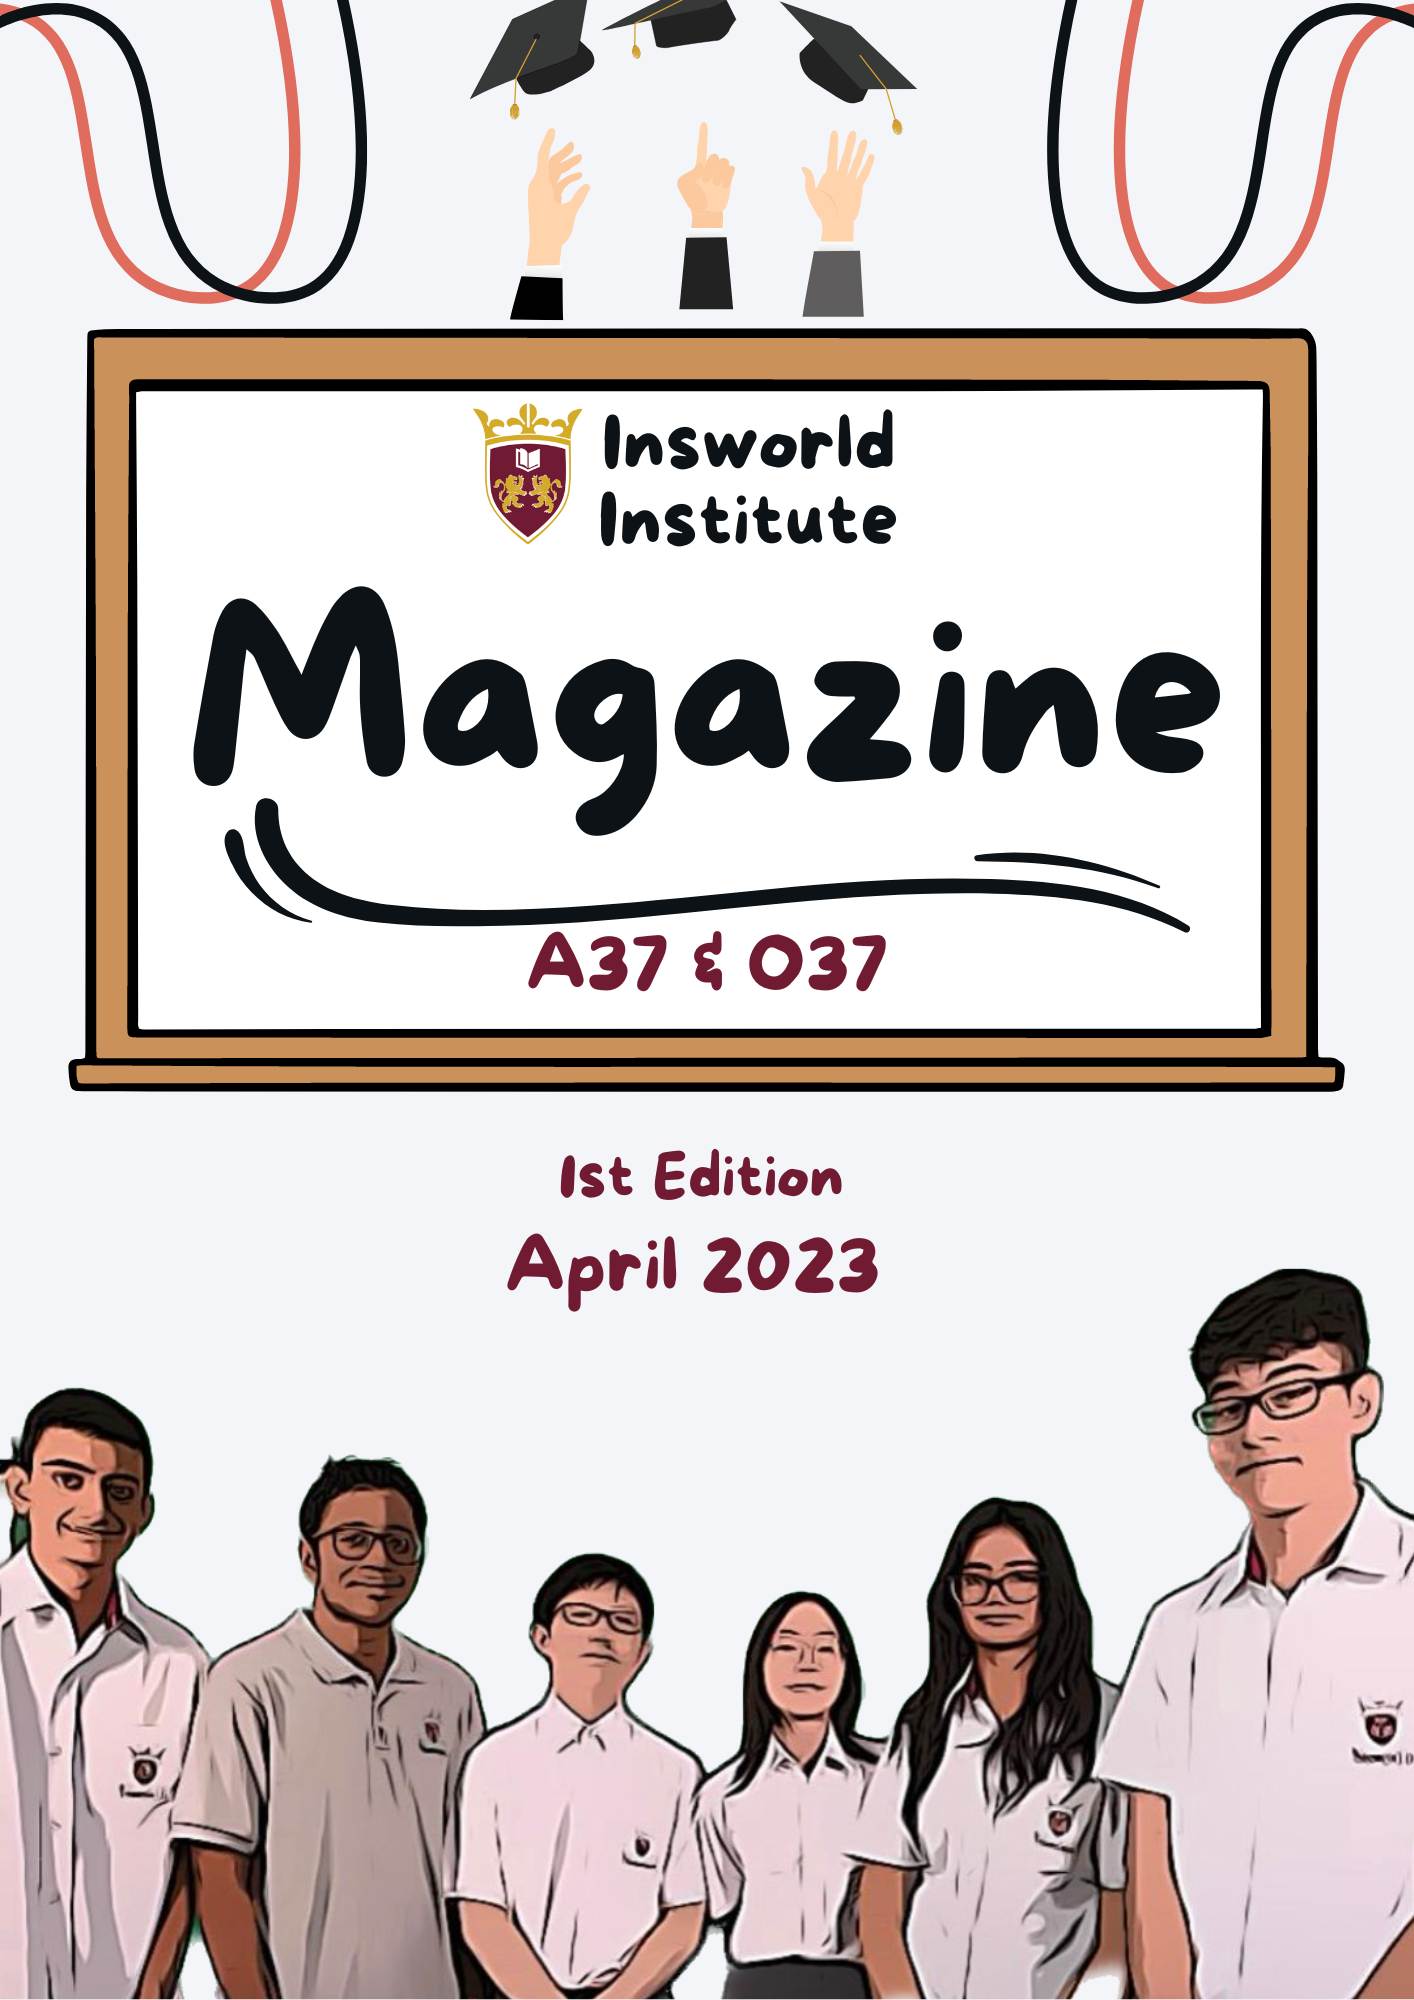 Insworld Institute Magazine